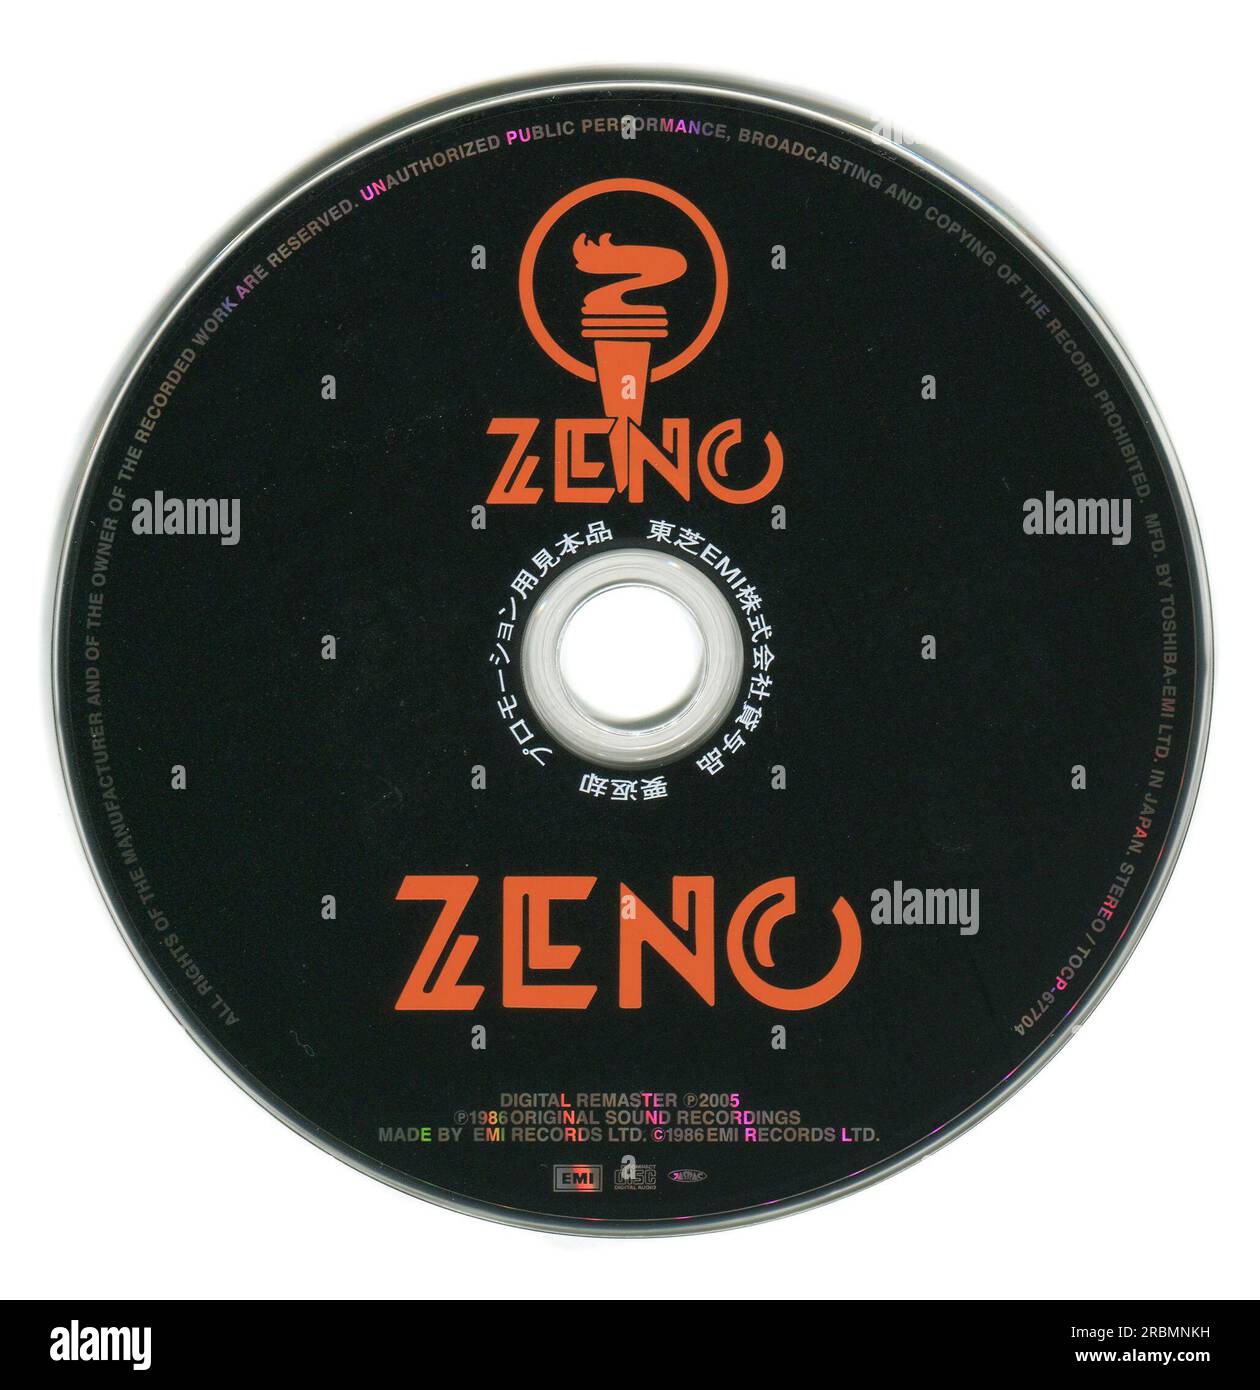 CD: Zeno – Zeno. (TOCP-67704), Aktion, veröffentlicht am 21. Juli 2005. Stockfoto